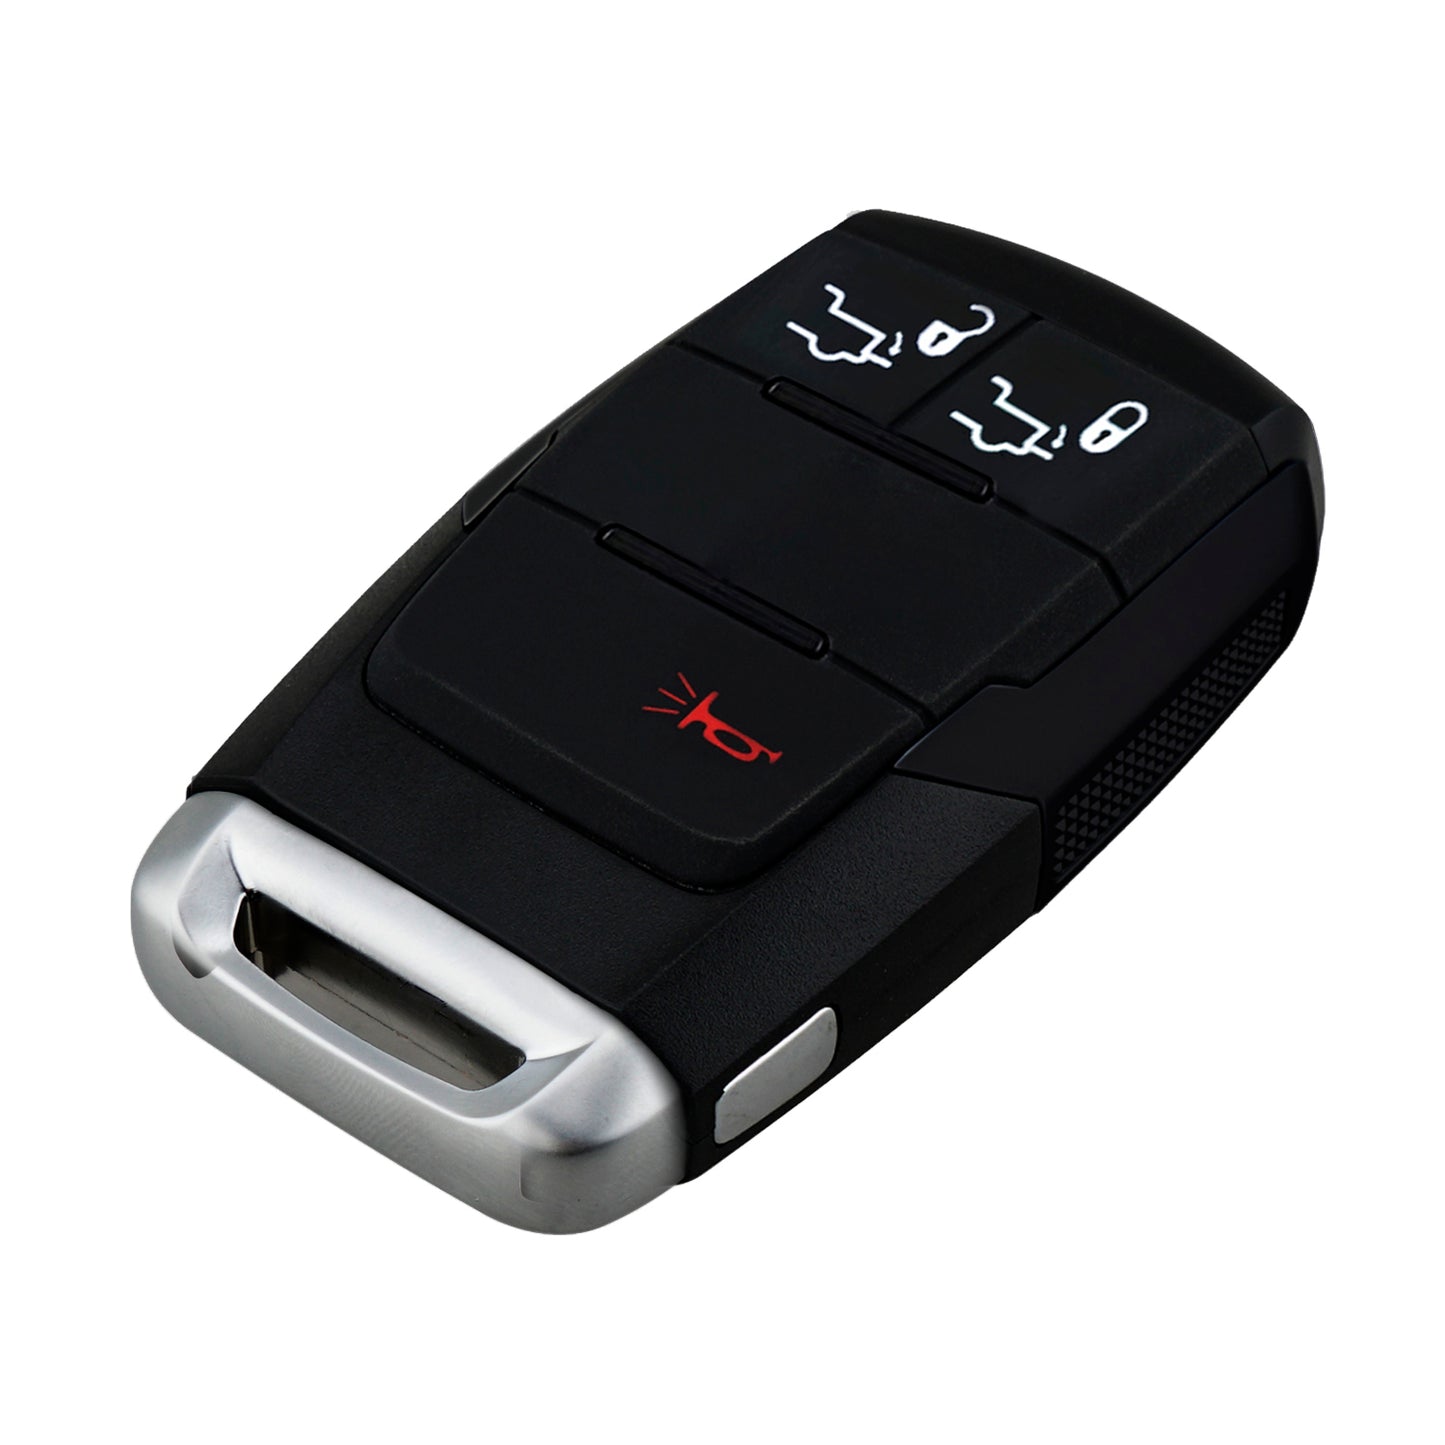 1 Button 433MHz Car Key Remote Keyless Entry Fob Control Smart For 2019 - 2022 Dodge Ram Pickup HD 2500 3500 4500 5500 Models FCC ID: GQ4-76T SKU: J694